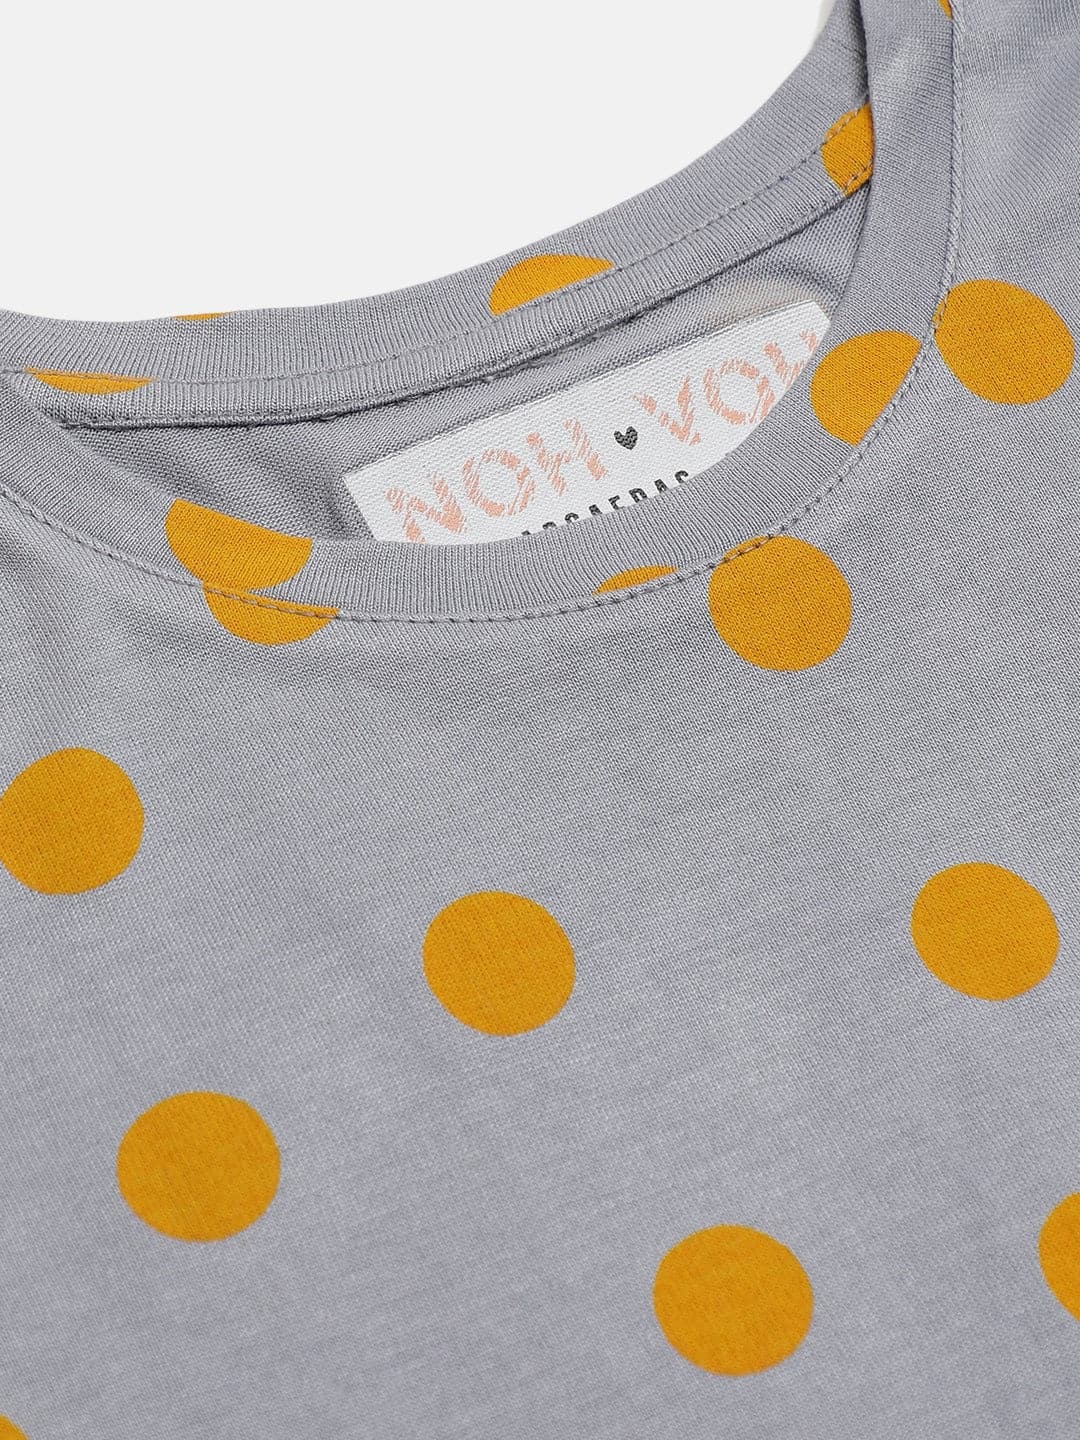 Girls Grey & Yellow Polka Dot T-Shirt - Lyush Kids